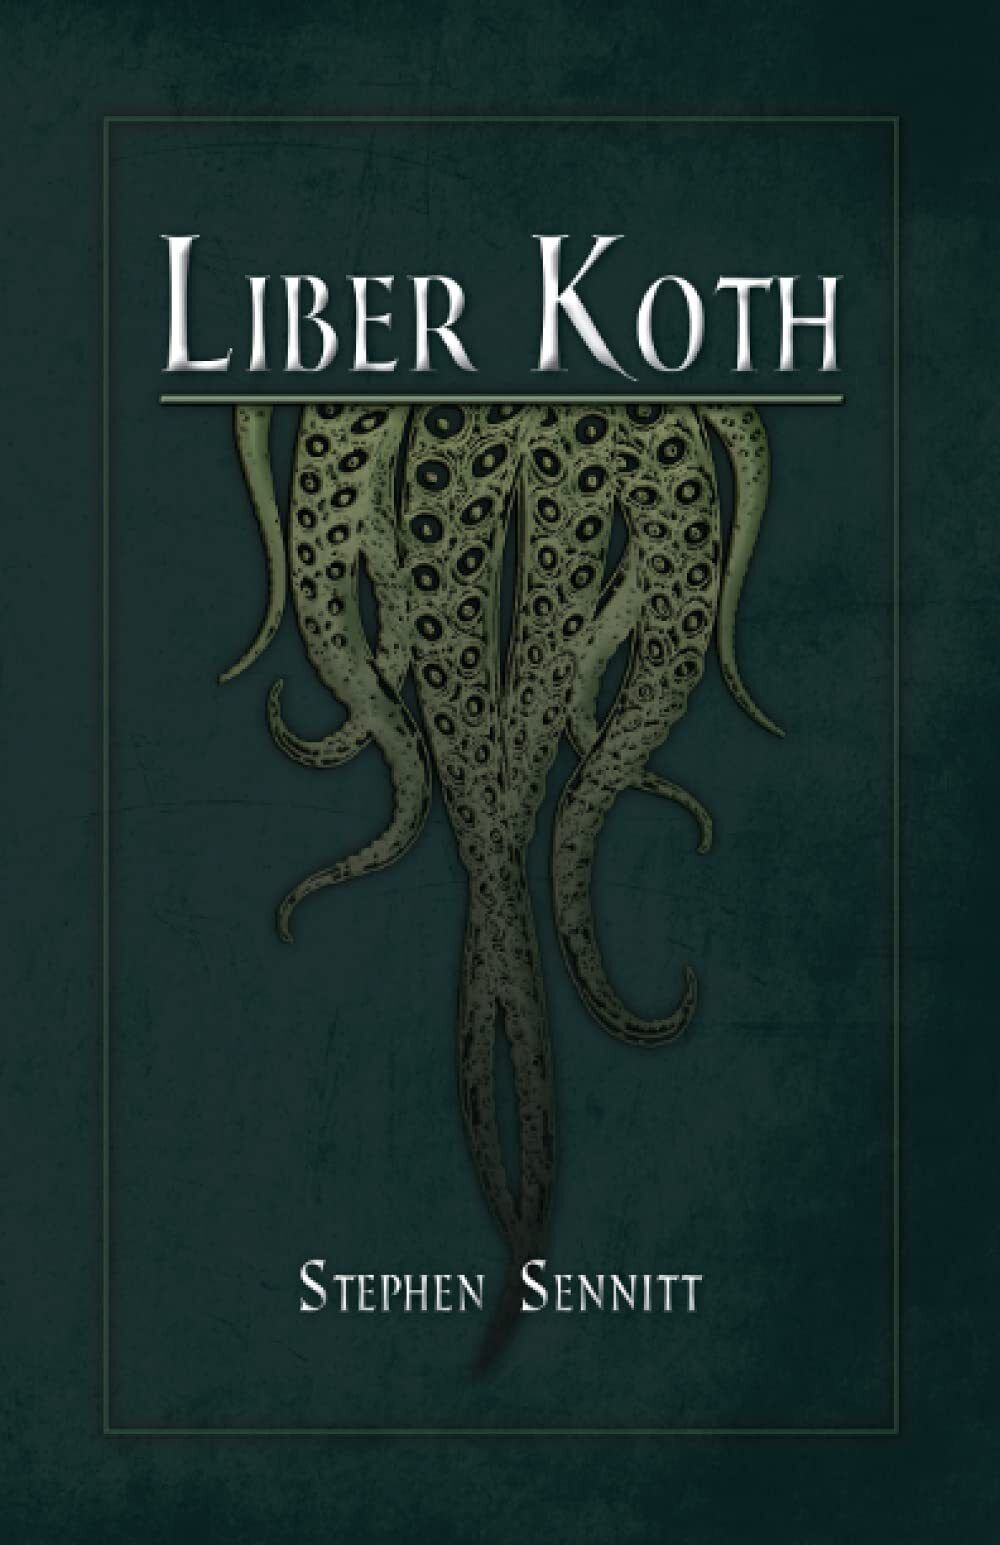 Liber Koth: La Magie du Mythe de Cthulhu - STEPHEN SENNITT - Unicursal, 2021